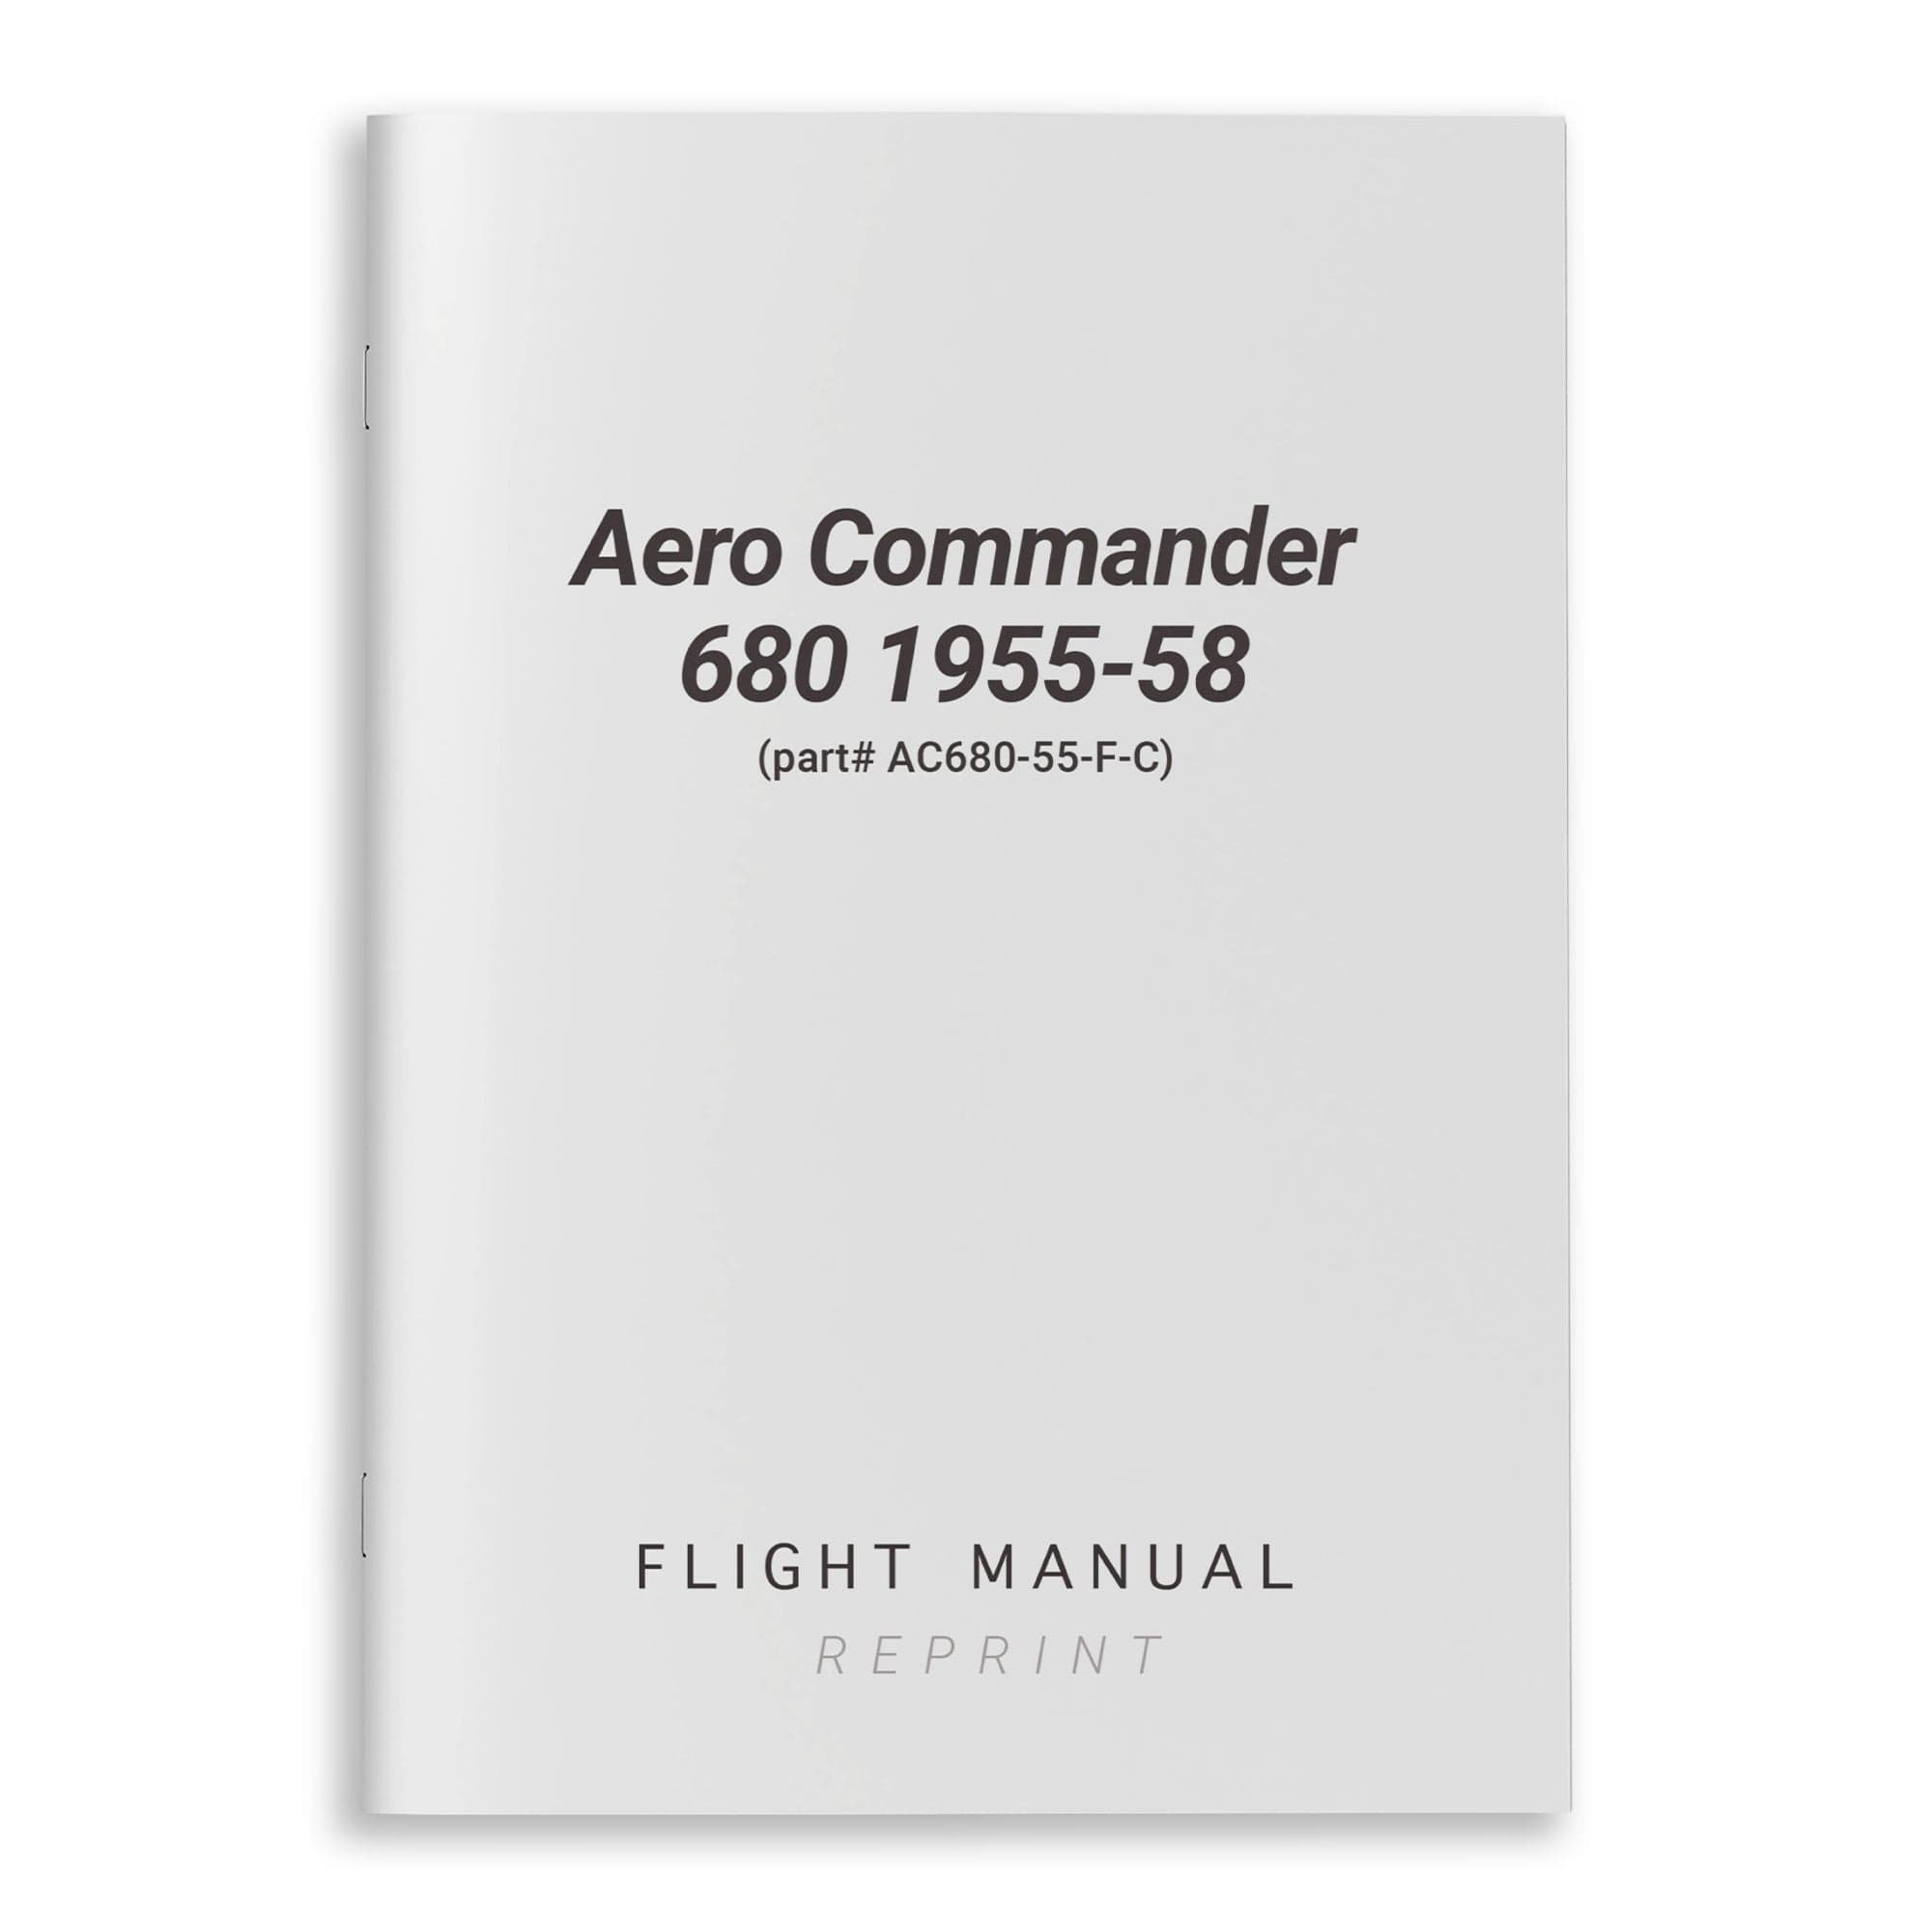 Aero Commander 680 1955-58 Flight Manual (part# AC680-55-F-C)